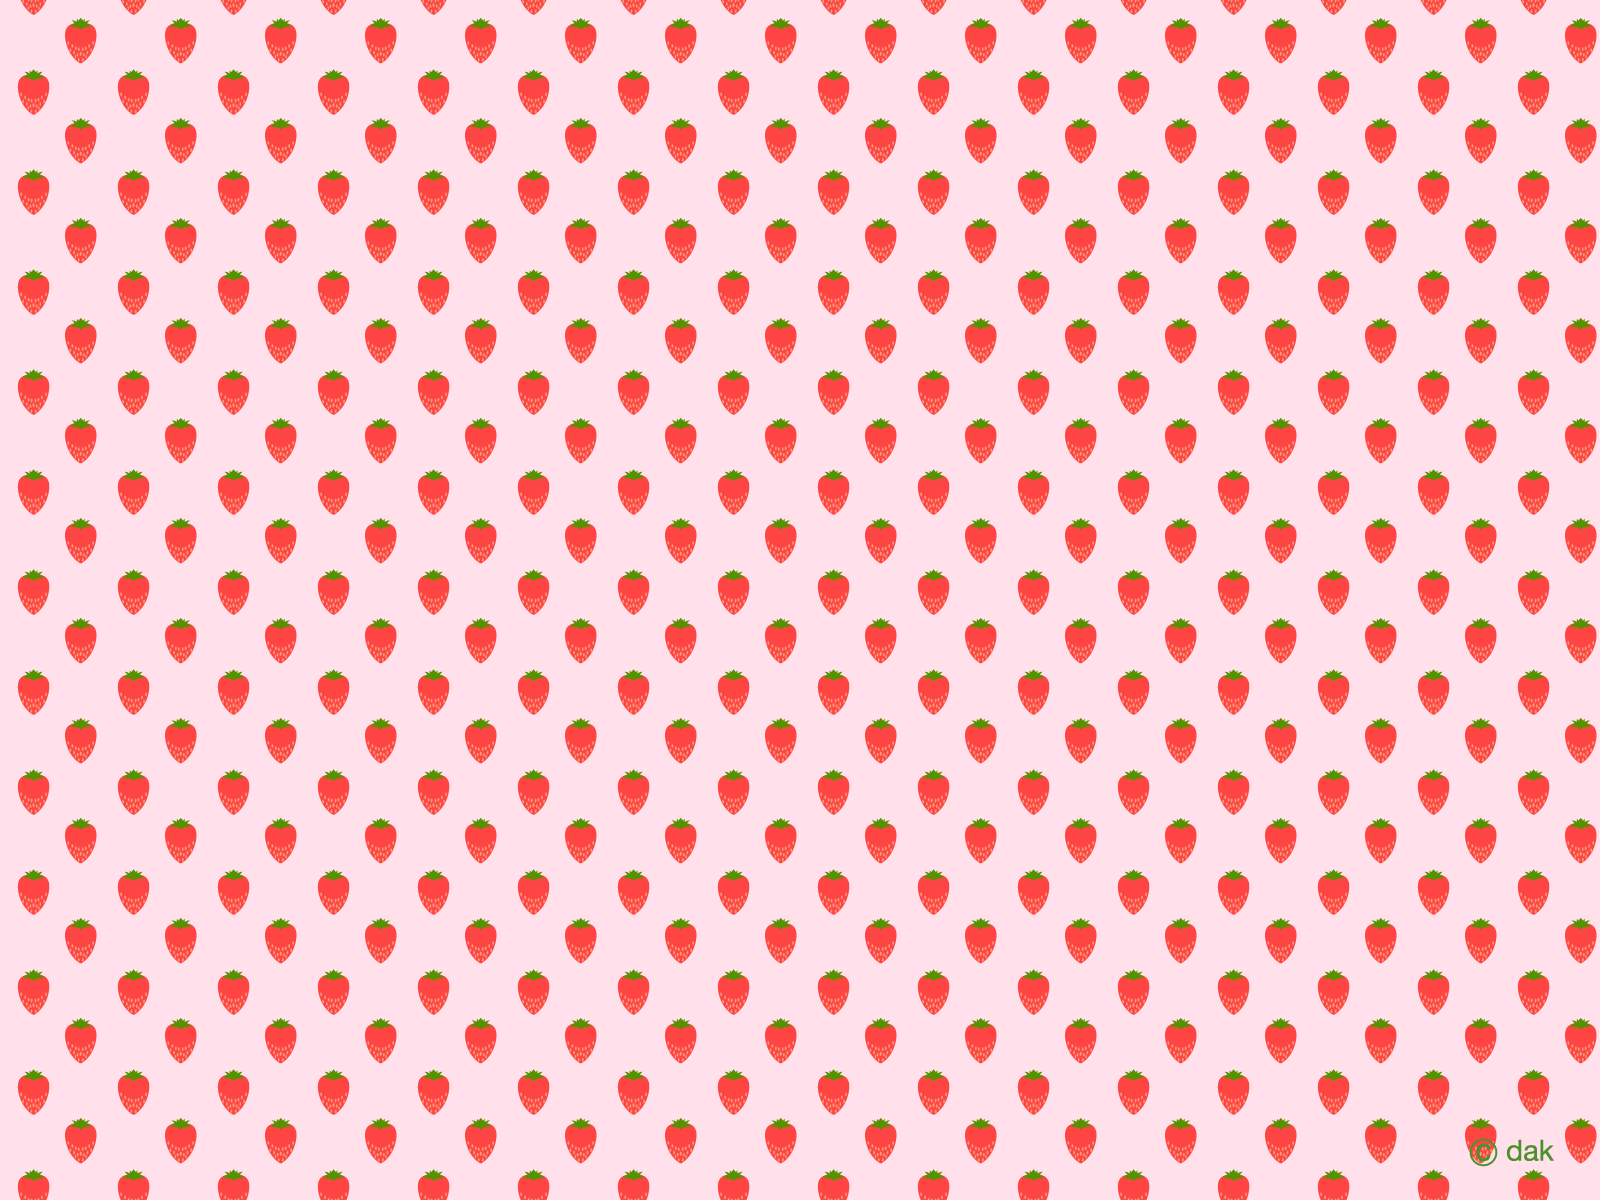 Kawaii Strawberry Wallpaper